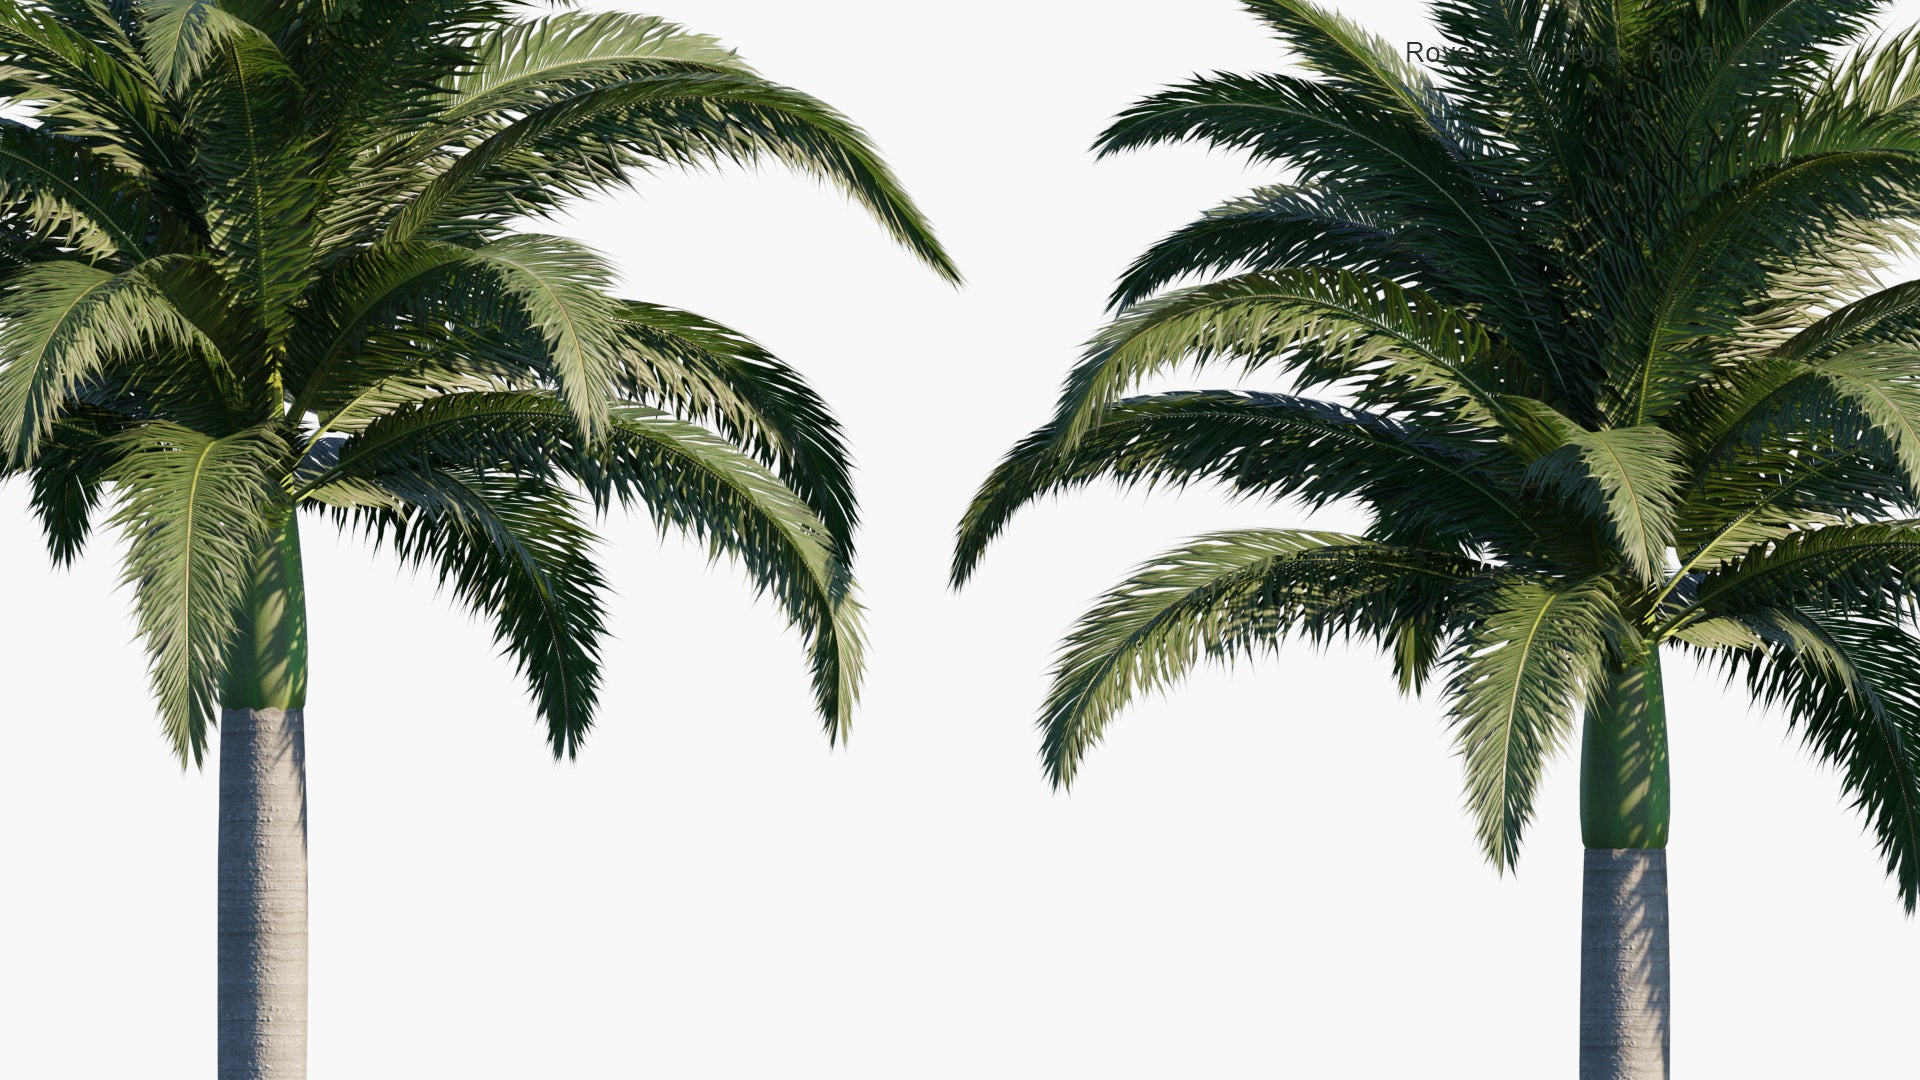 Low Poly Roystonea Regia - Cuban Royal Palm, Florida Royal Palm (3D Model)